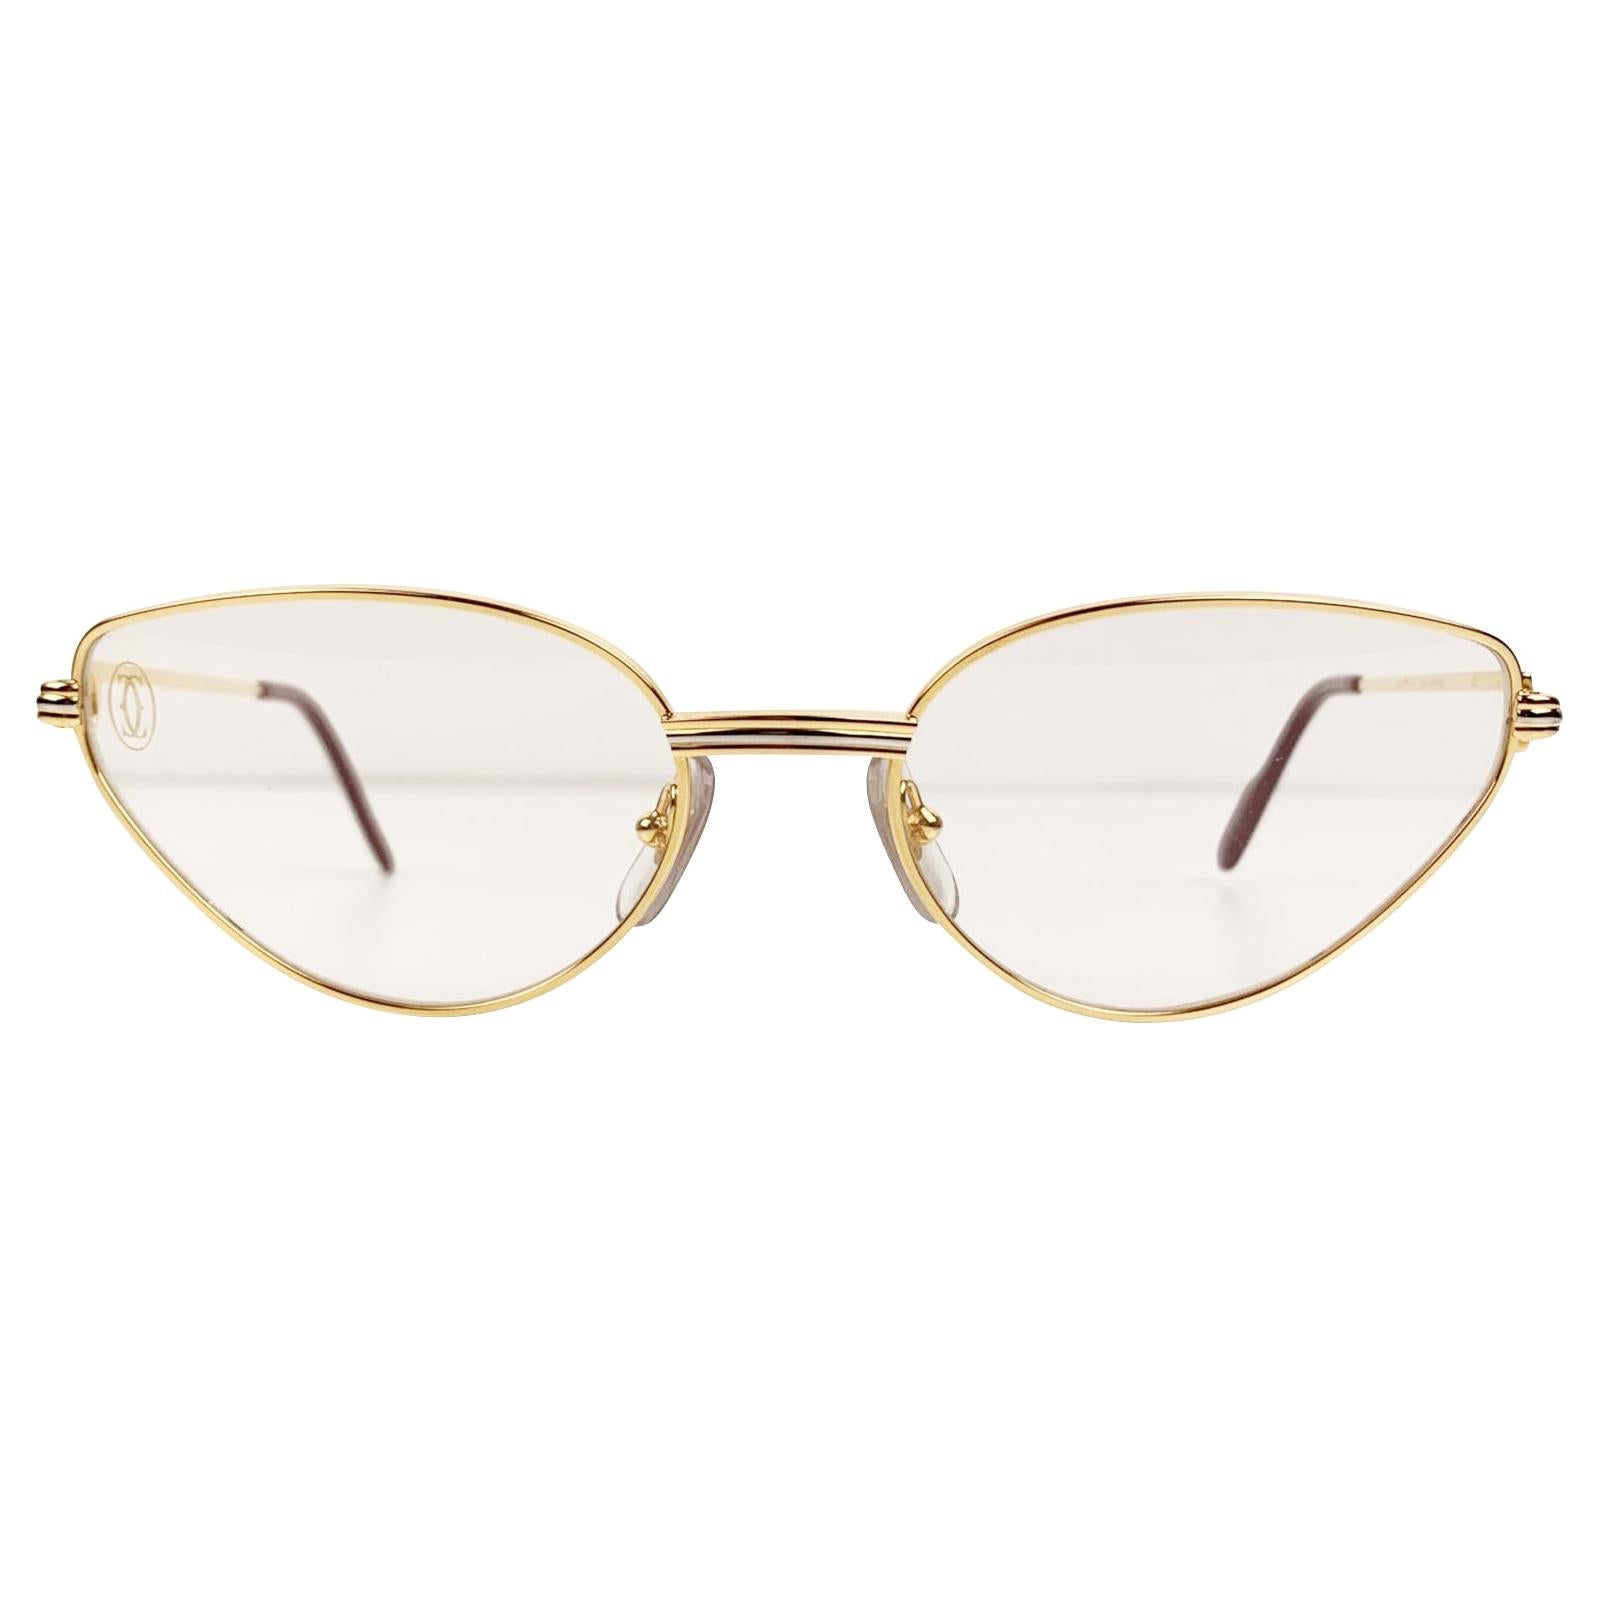 Cartier Paris Mint Cat-Eye Gold Eyeglasses Mod. Rivoli 56-19 135mm